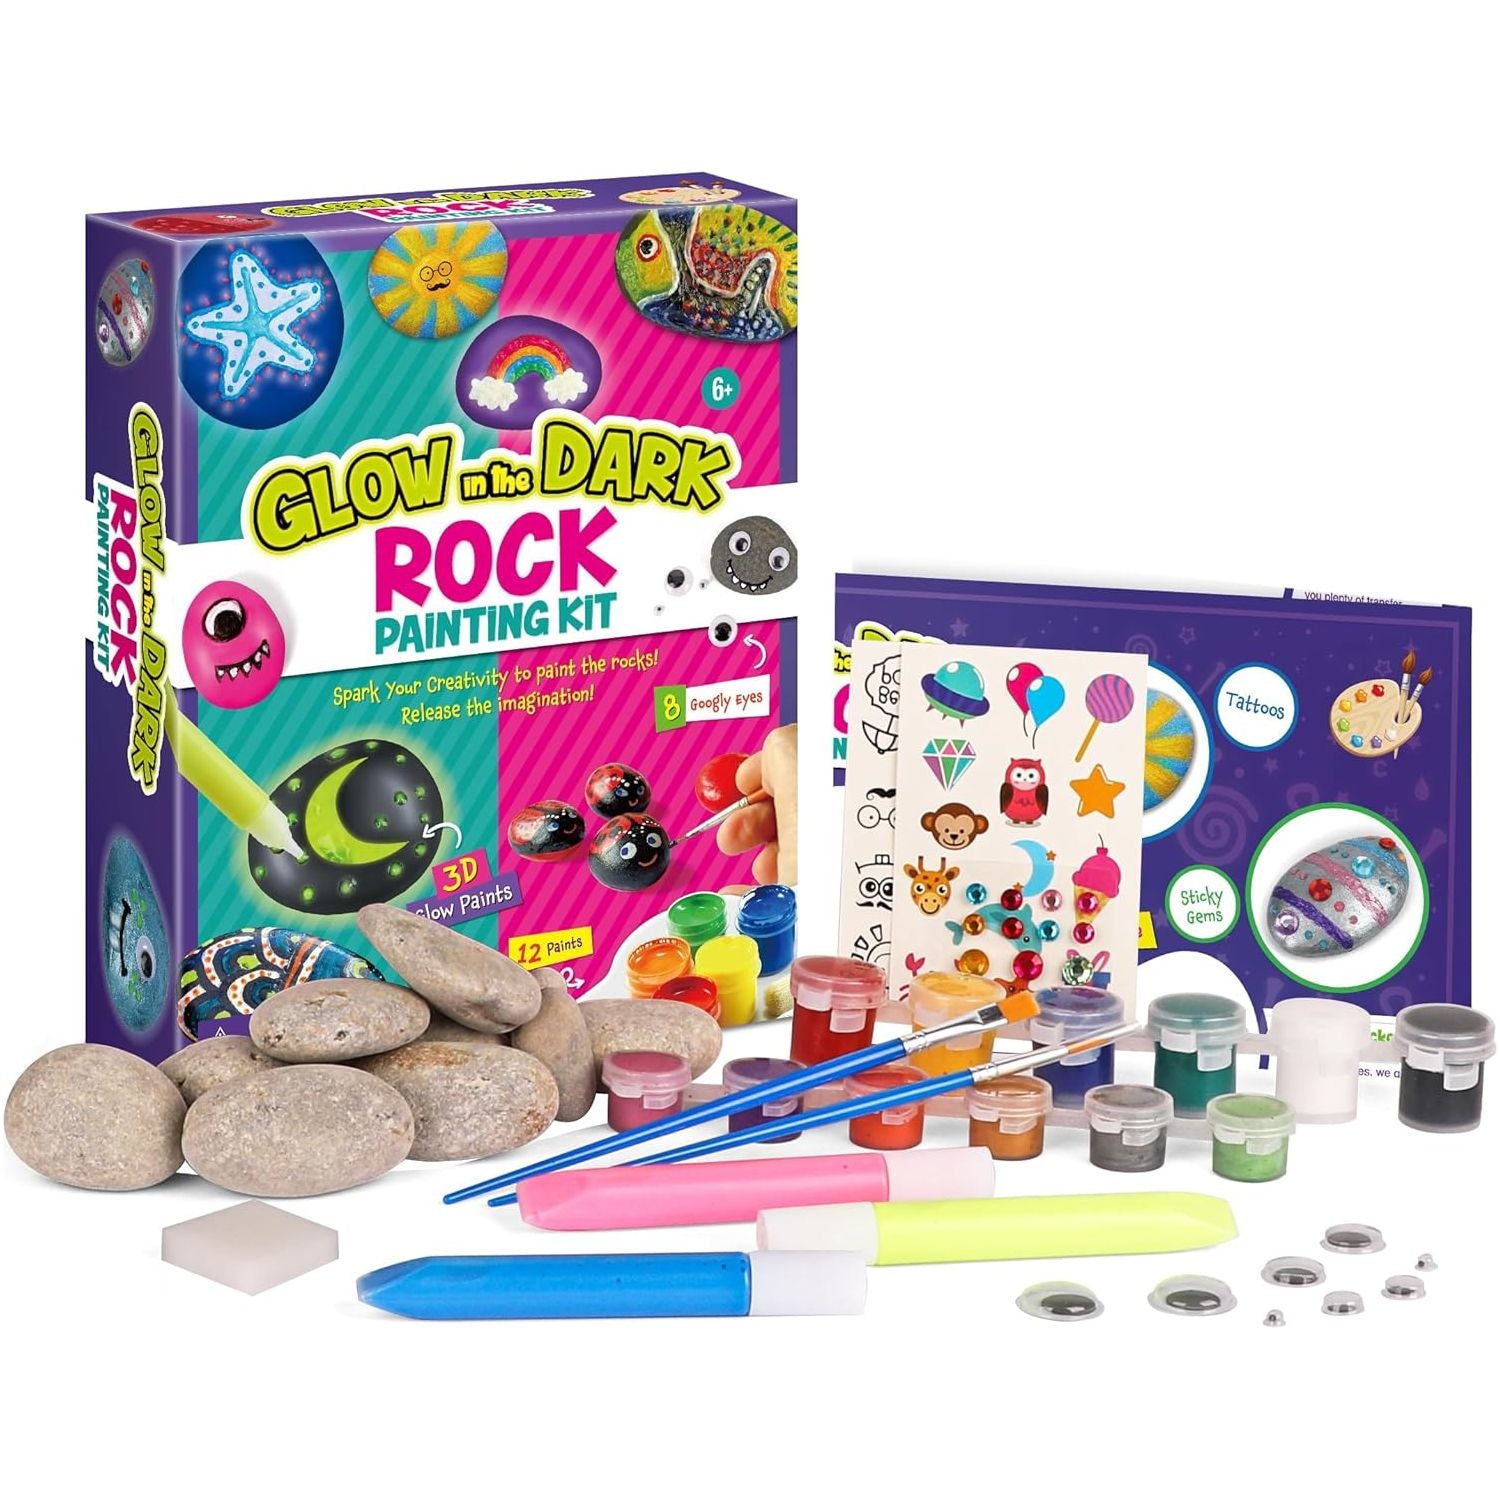 Eduman Glow In The Dark Rock Painting Kit, Diy Toy For Kids Edm041, 6+